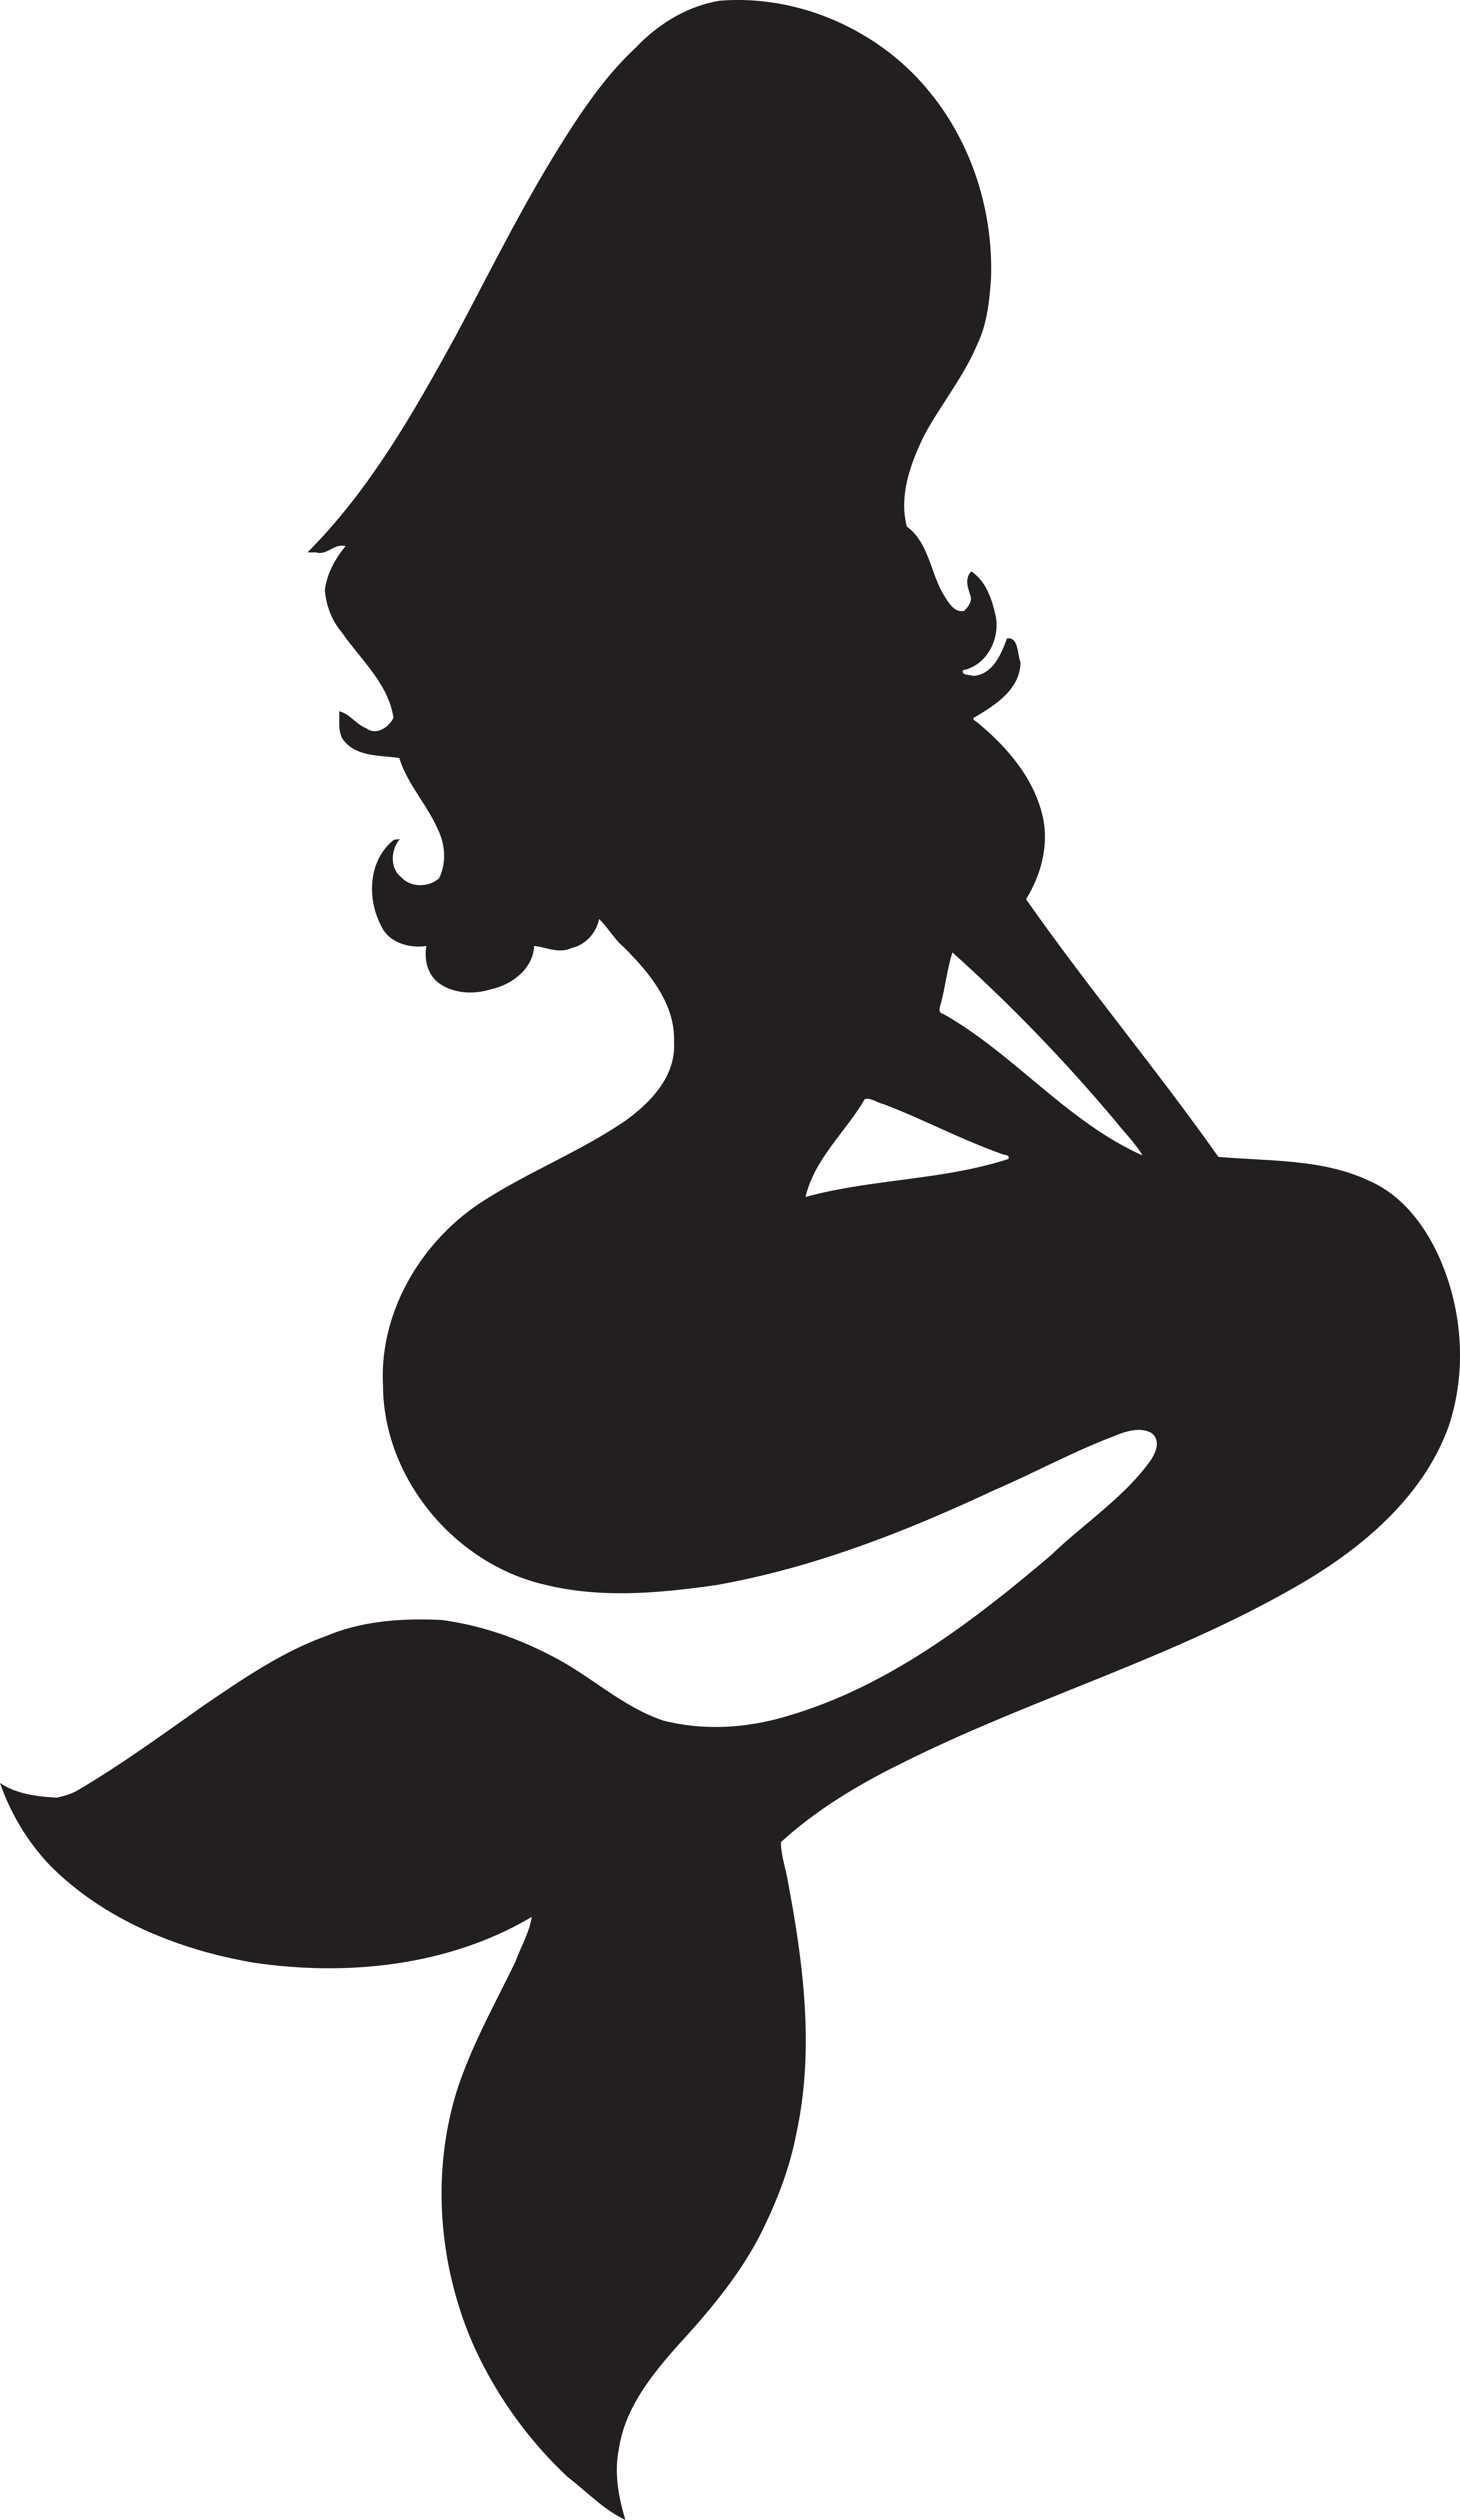 Ariel silhouette stencil.